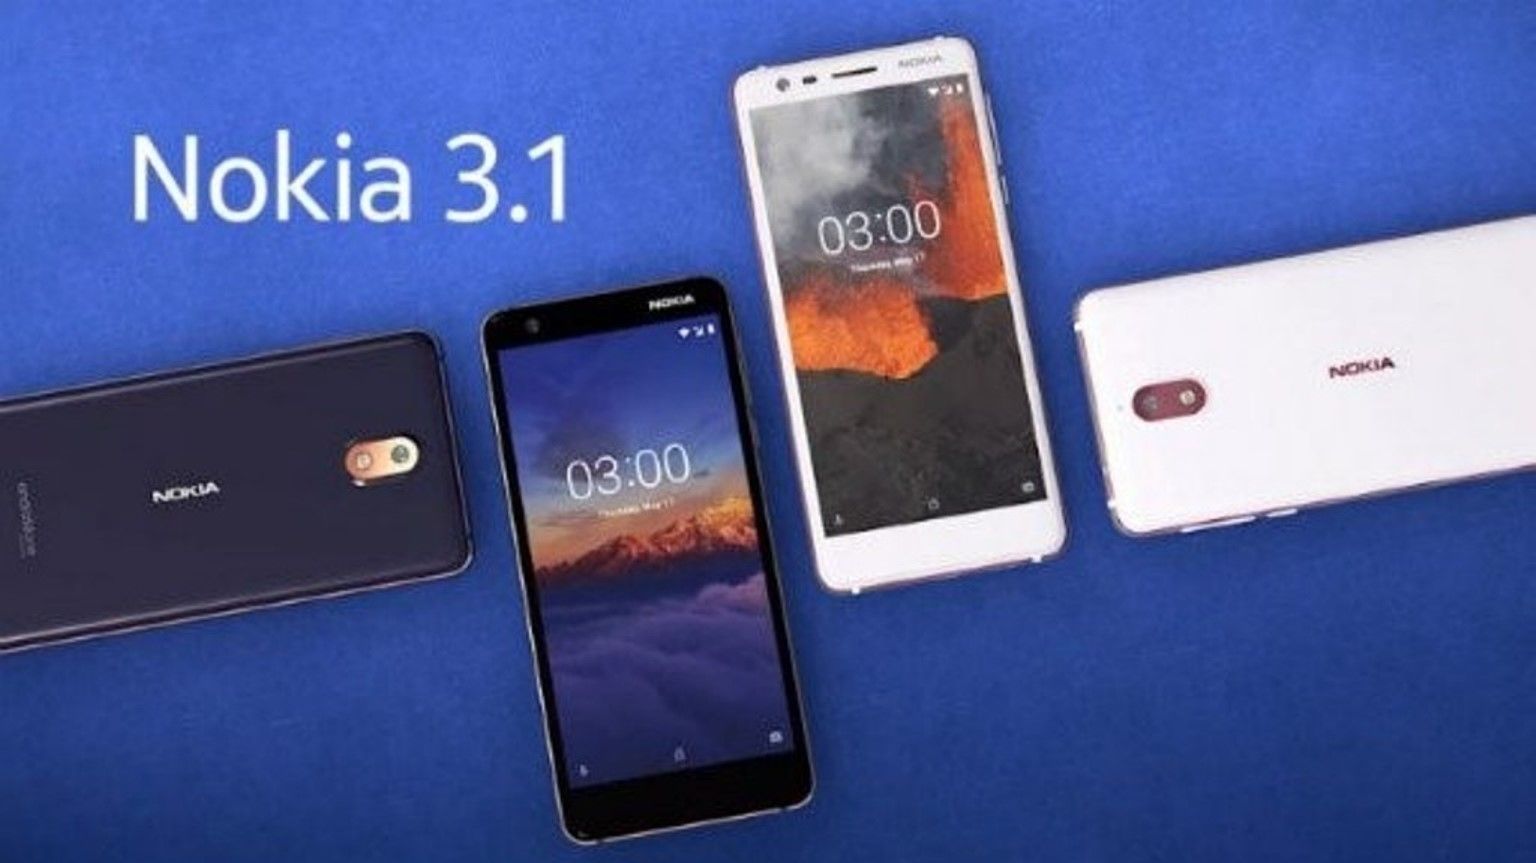 Nokia 3.1 Plus smartphone - pros and cons